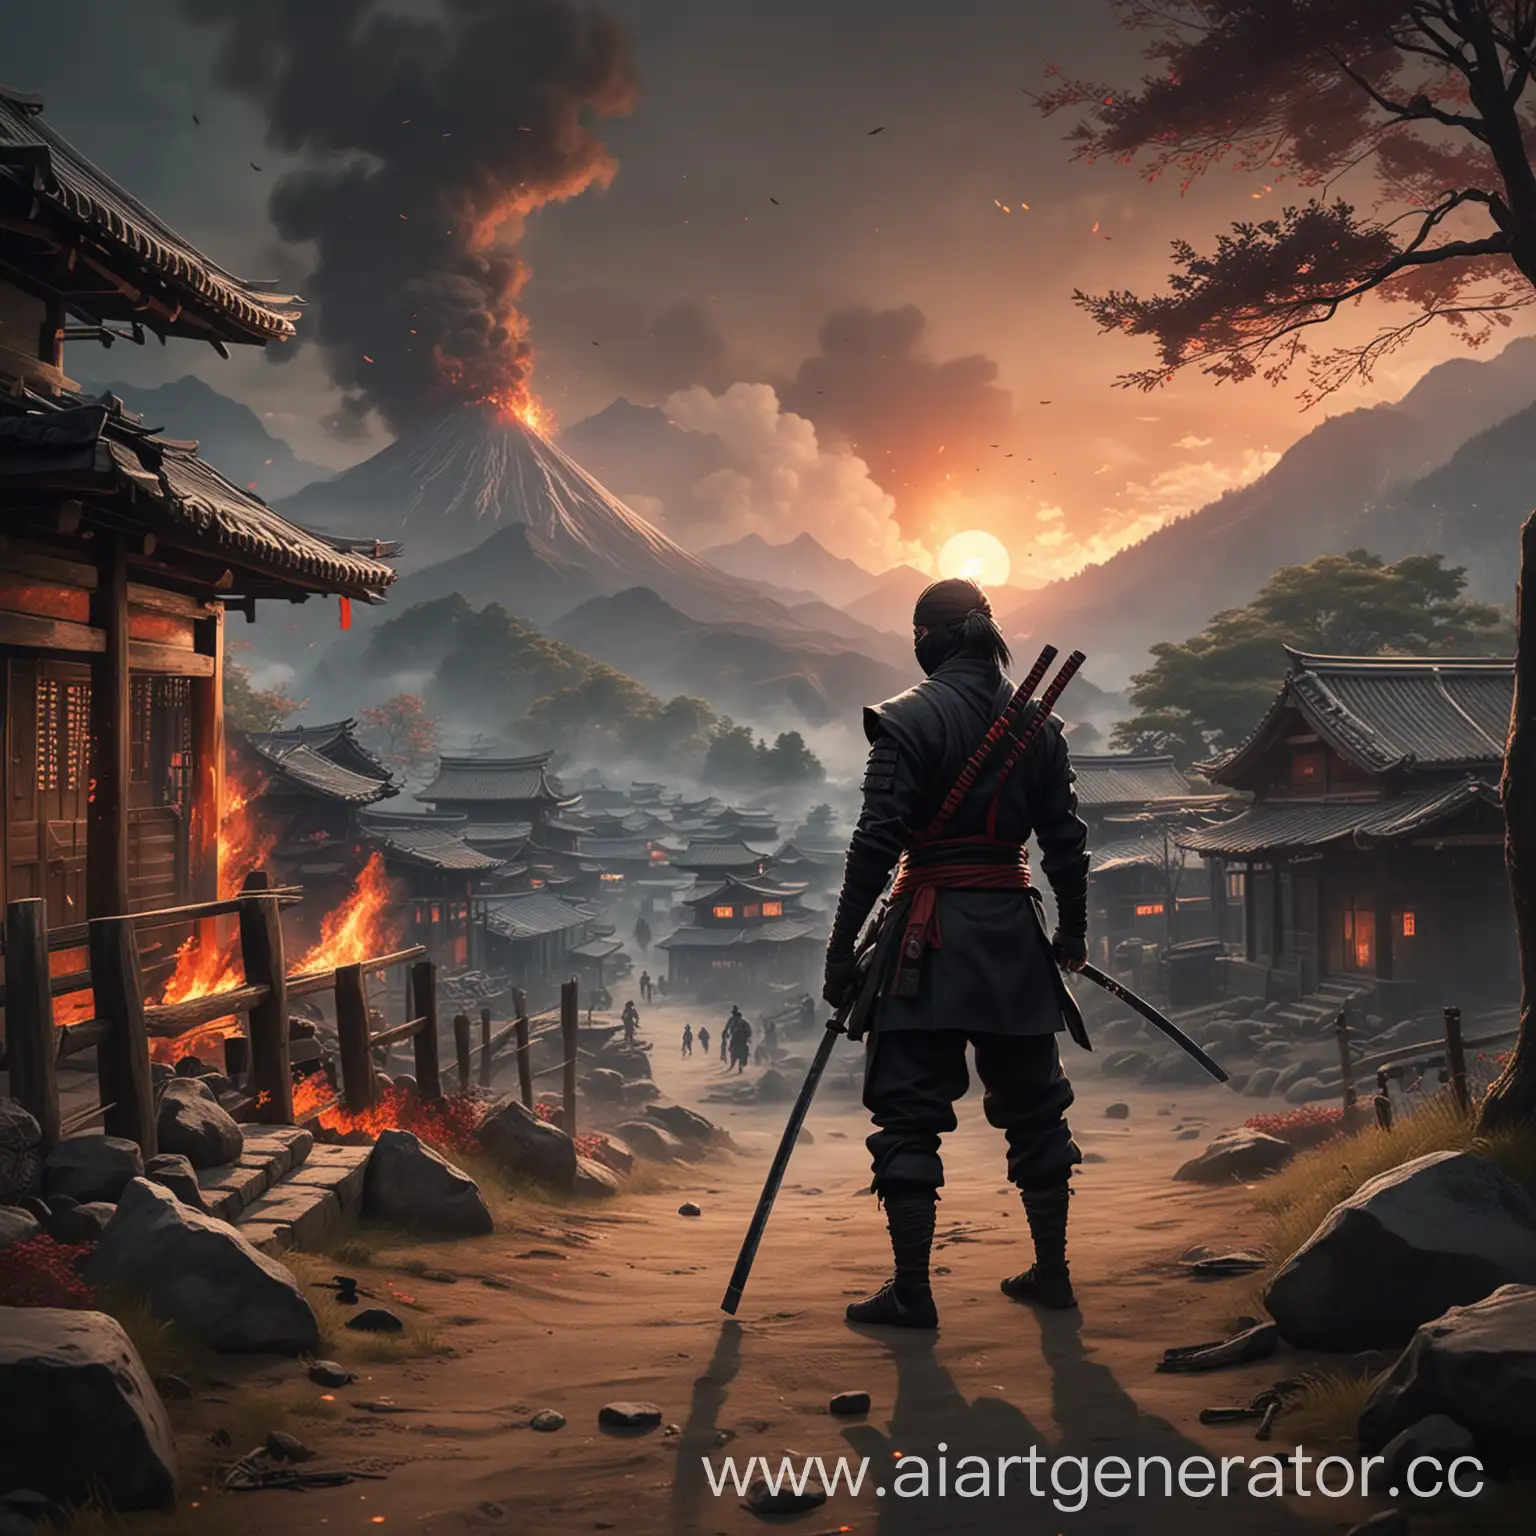 Ninja-Warrior-Stands-with-Katana-Overlooking-Burning-Japanese-Village